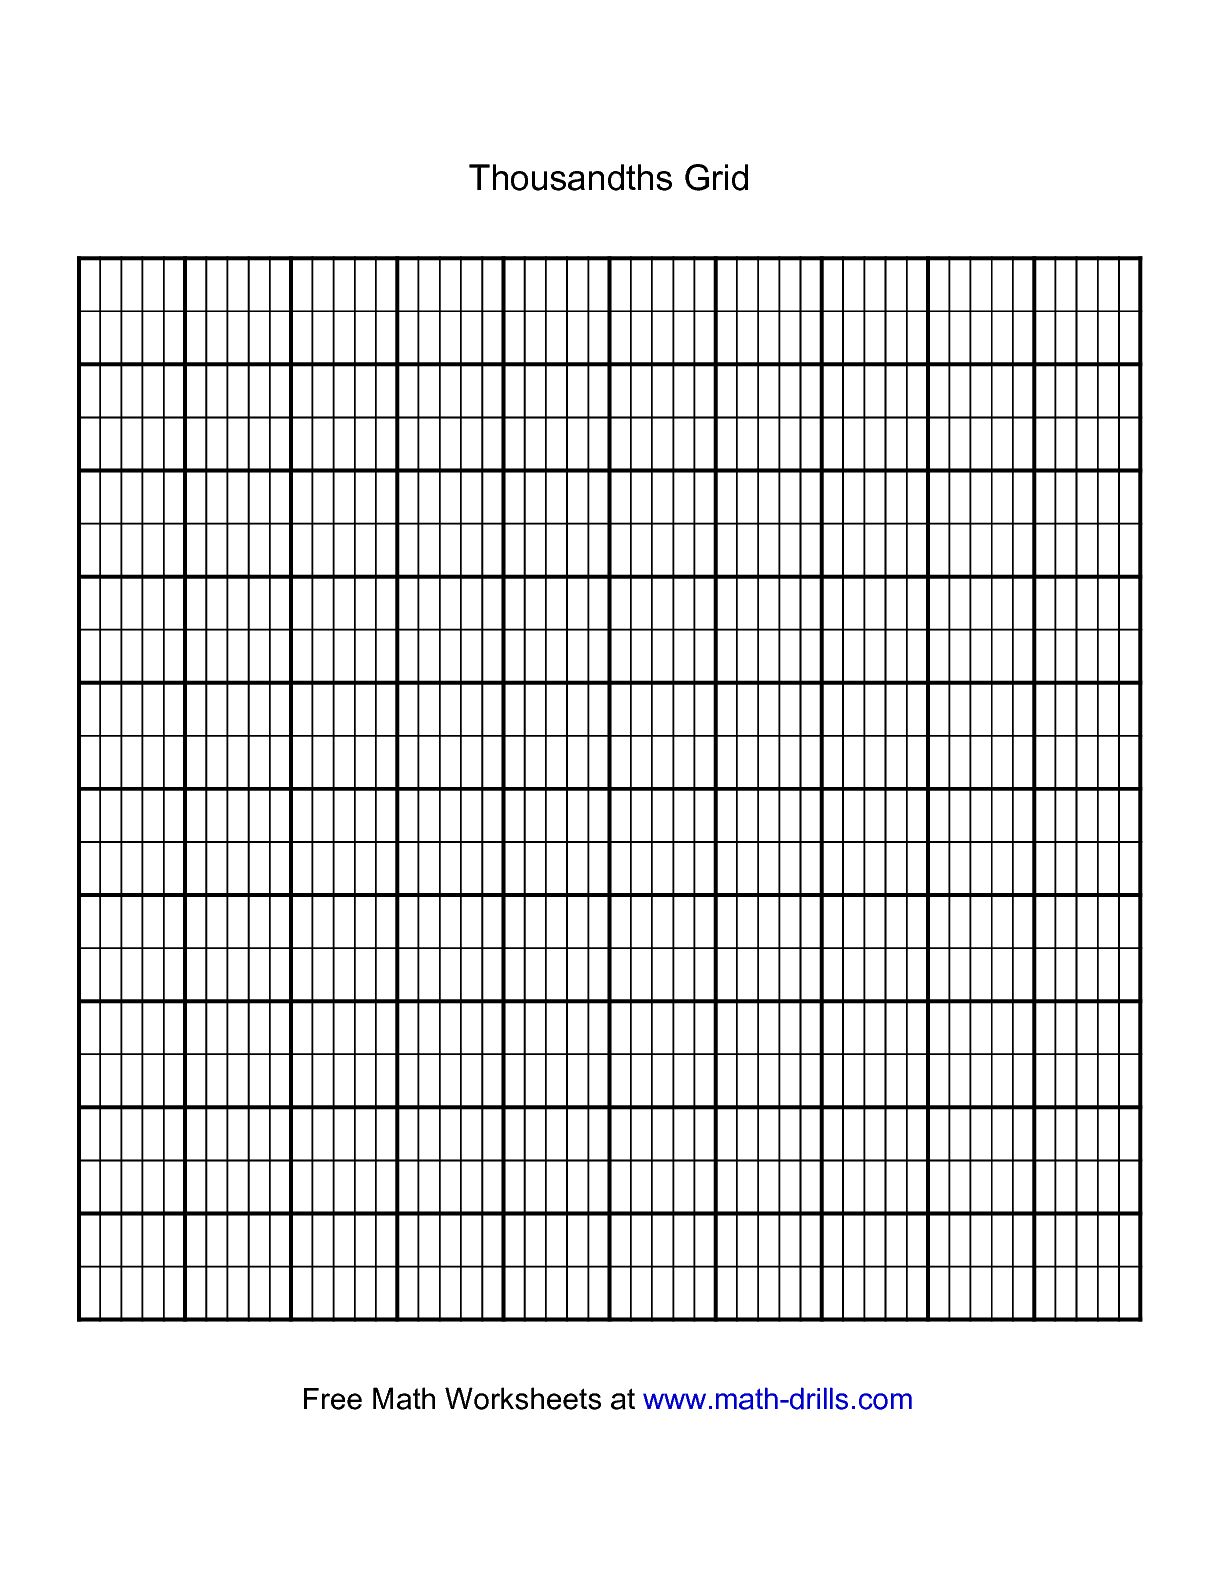 Printable Thousandths Grid Paper Image